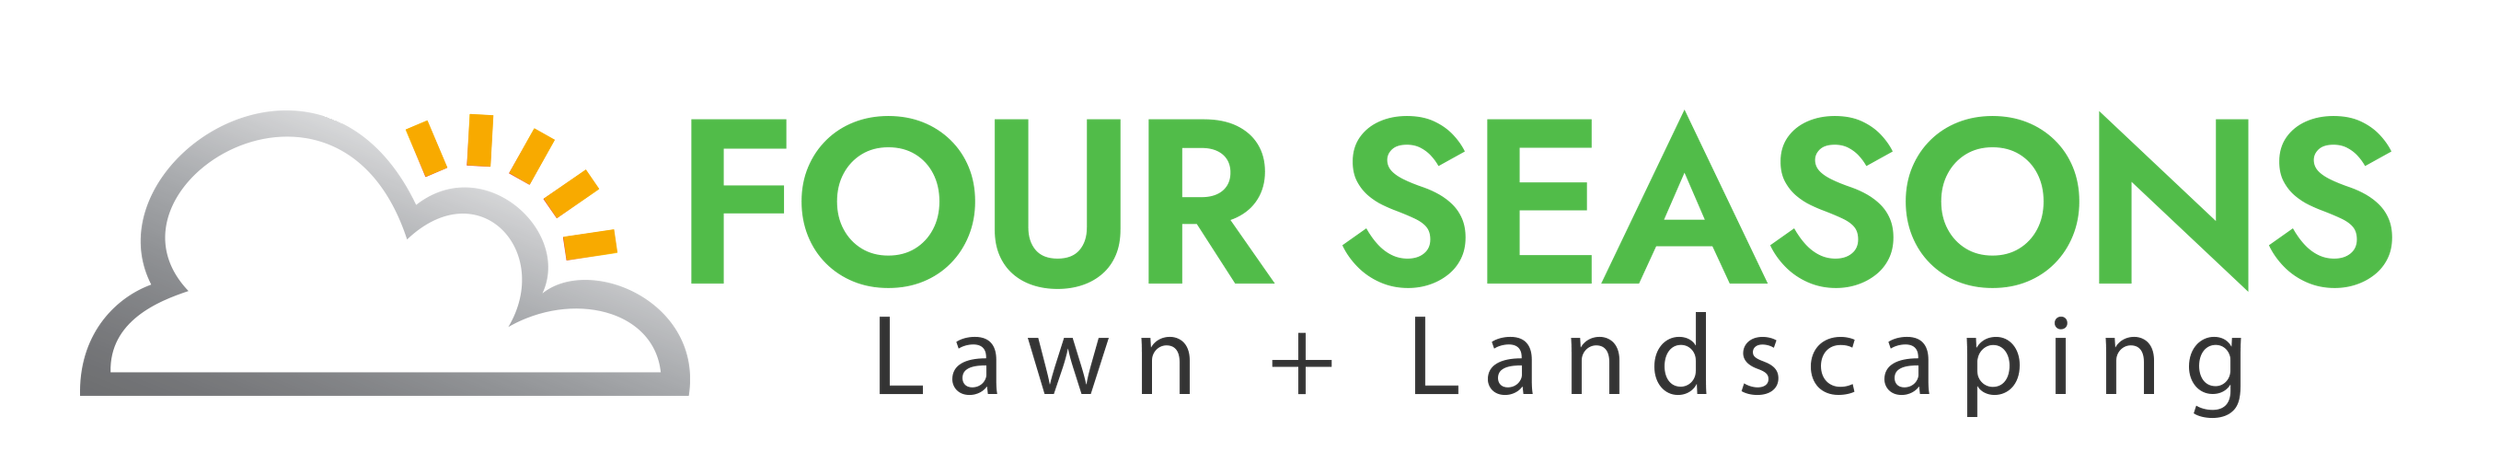 Four Seasons Lawn + Landscaping -Logo